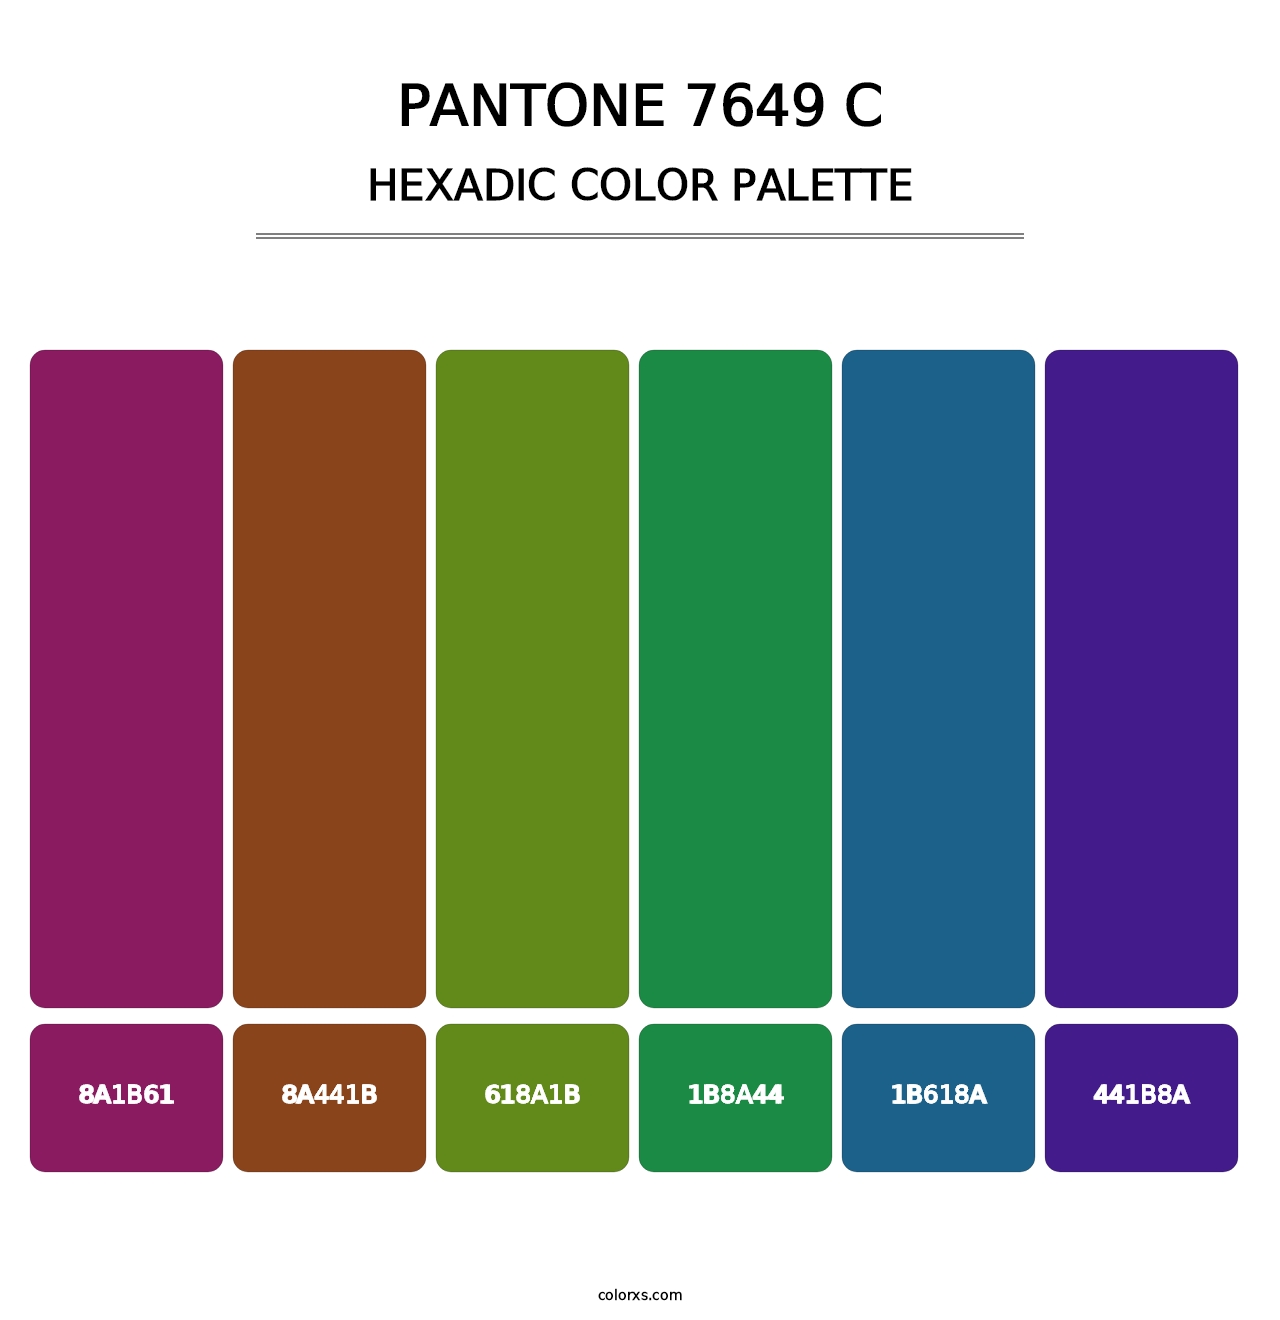 PANTONE 7649 C - Hexadic Color Palette